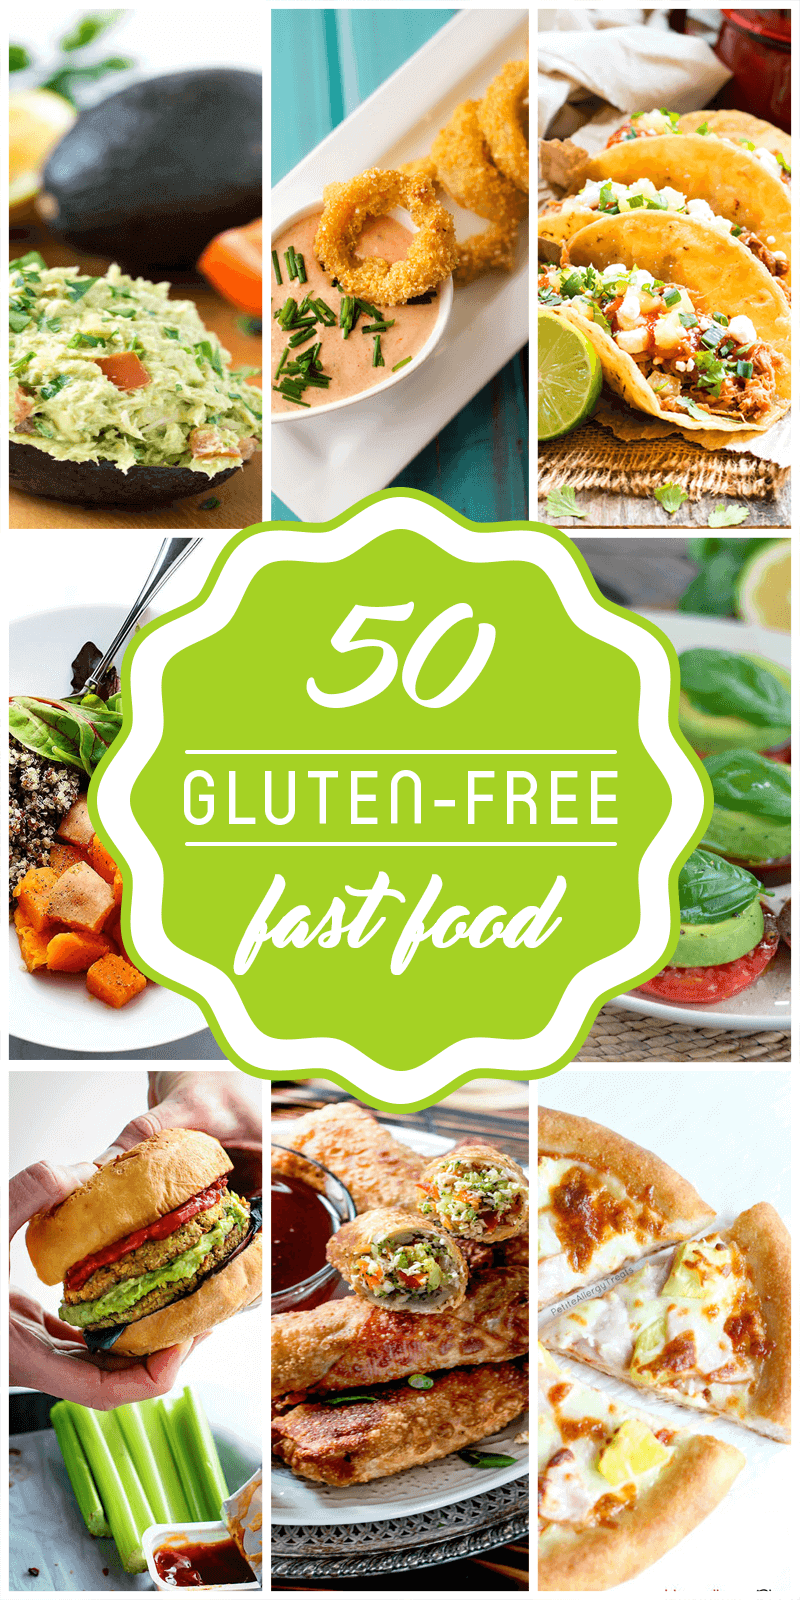 Gluten-Free Fast Foods